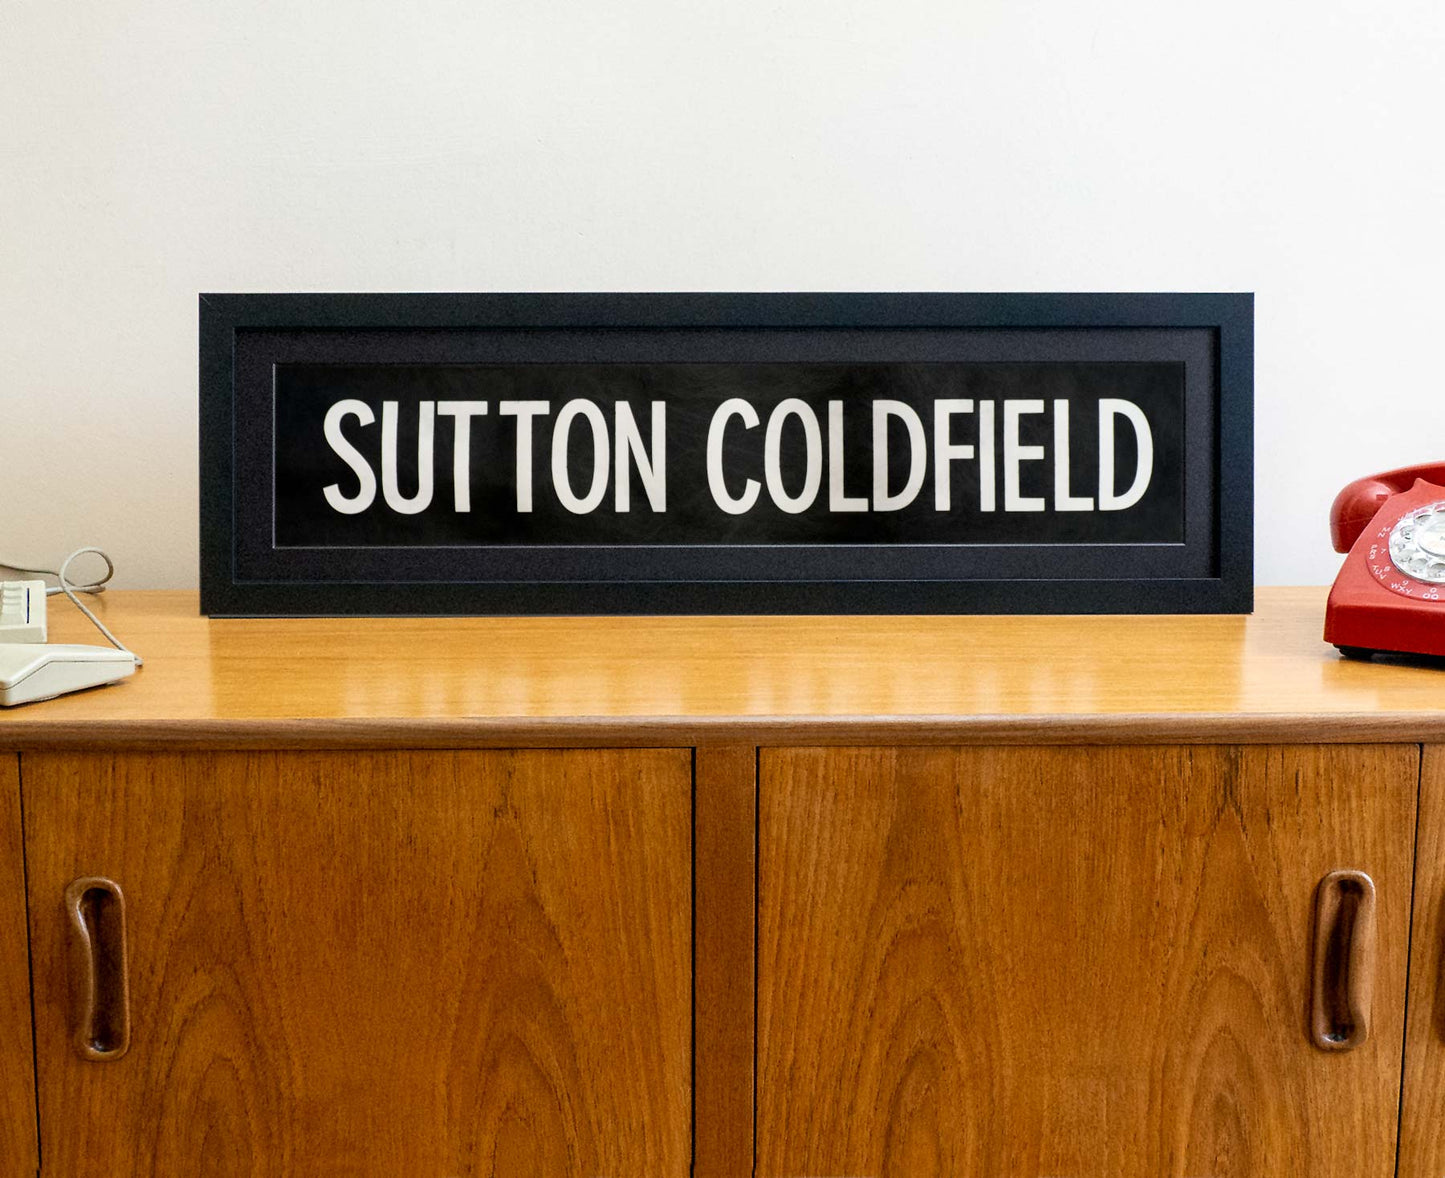 Sutton Coldfield 1980s framed original bus blind